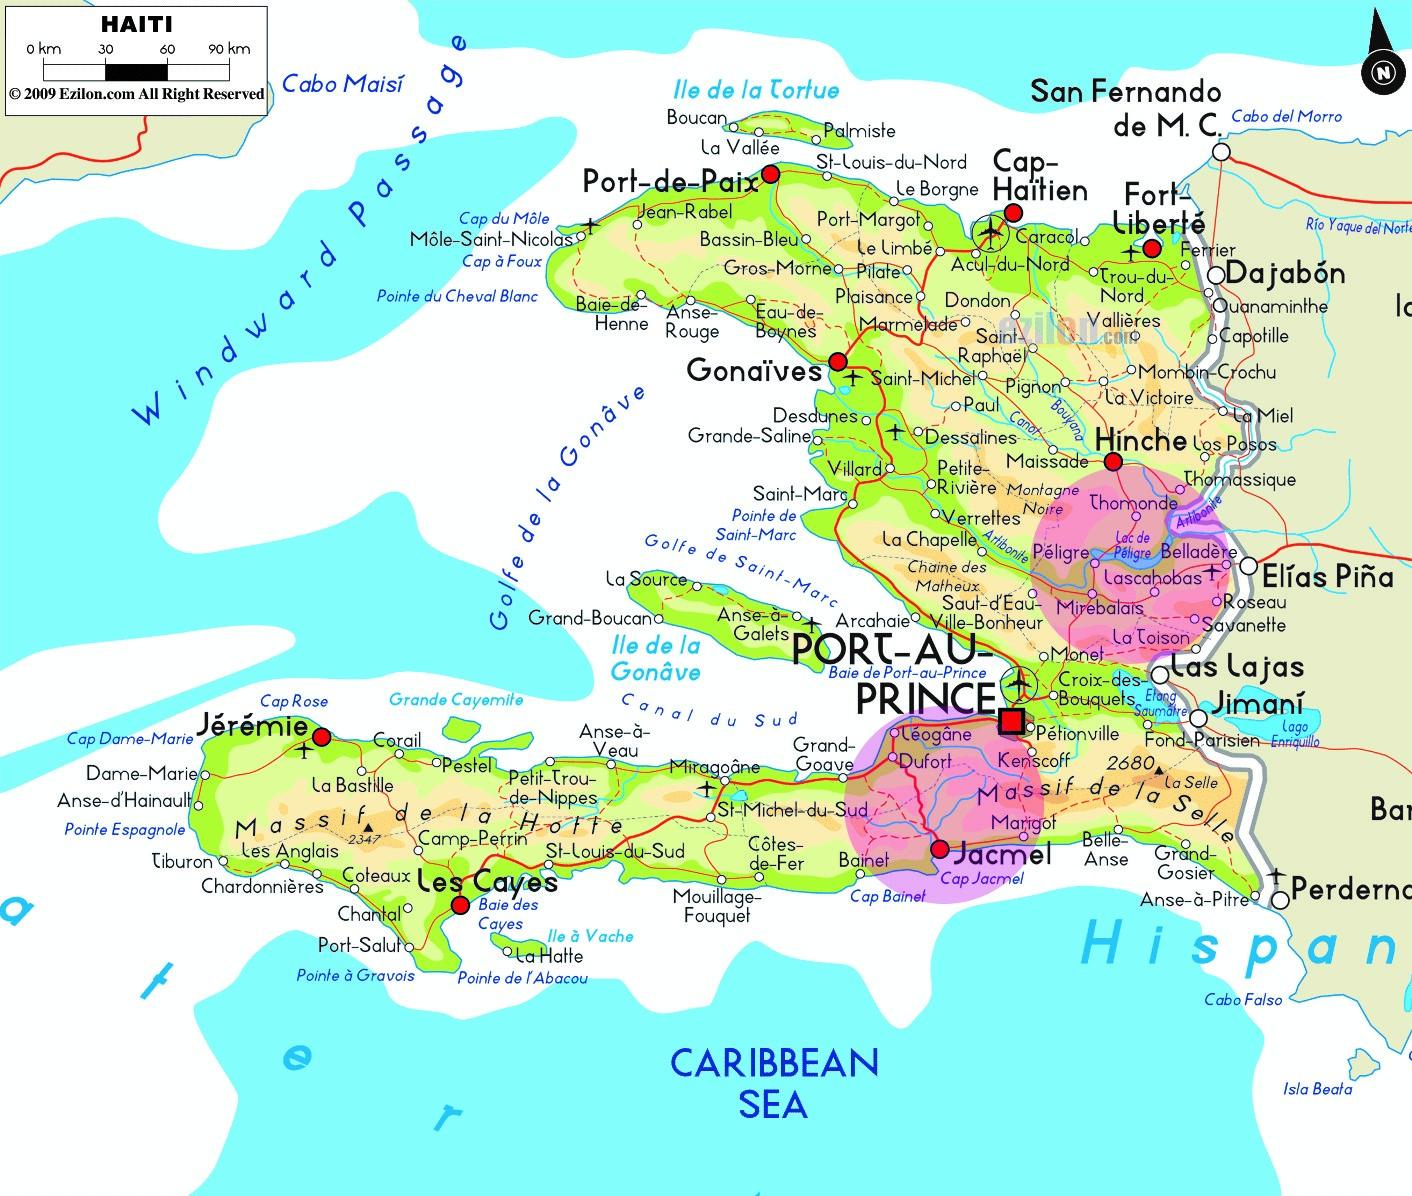 Kart over Haiti.